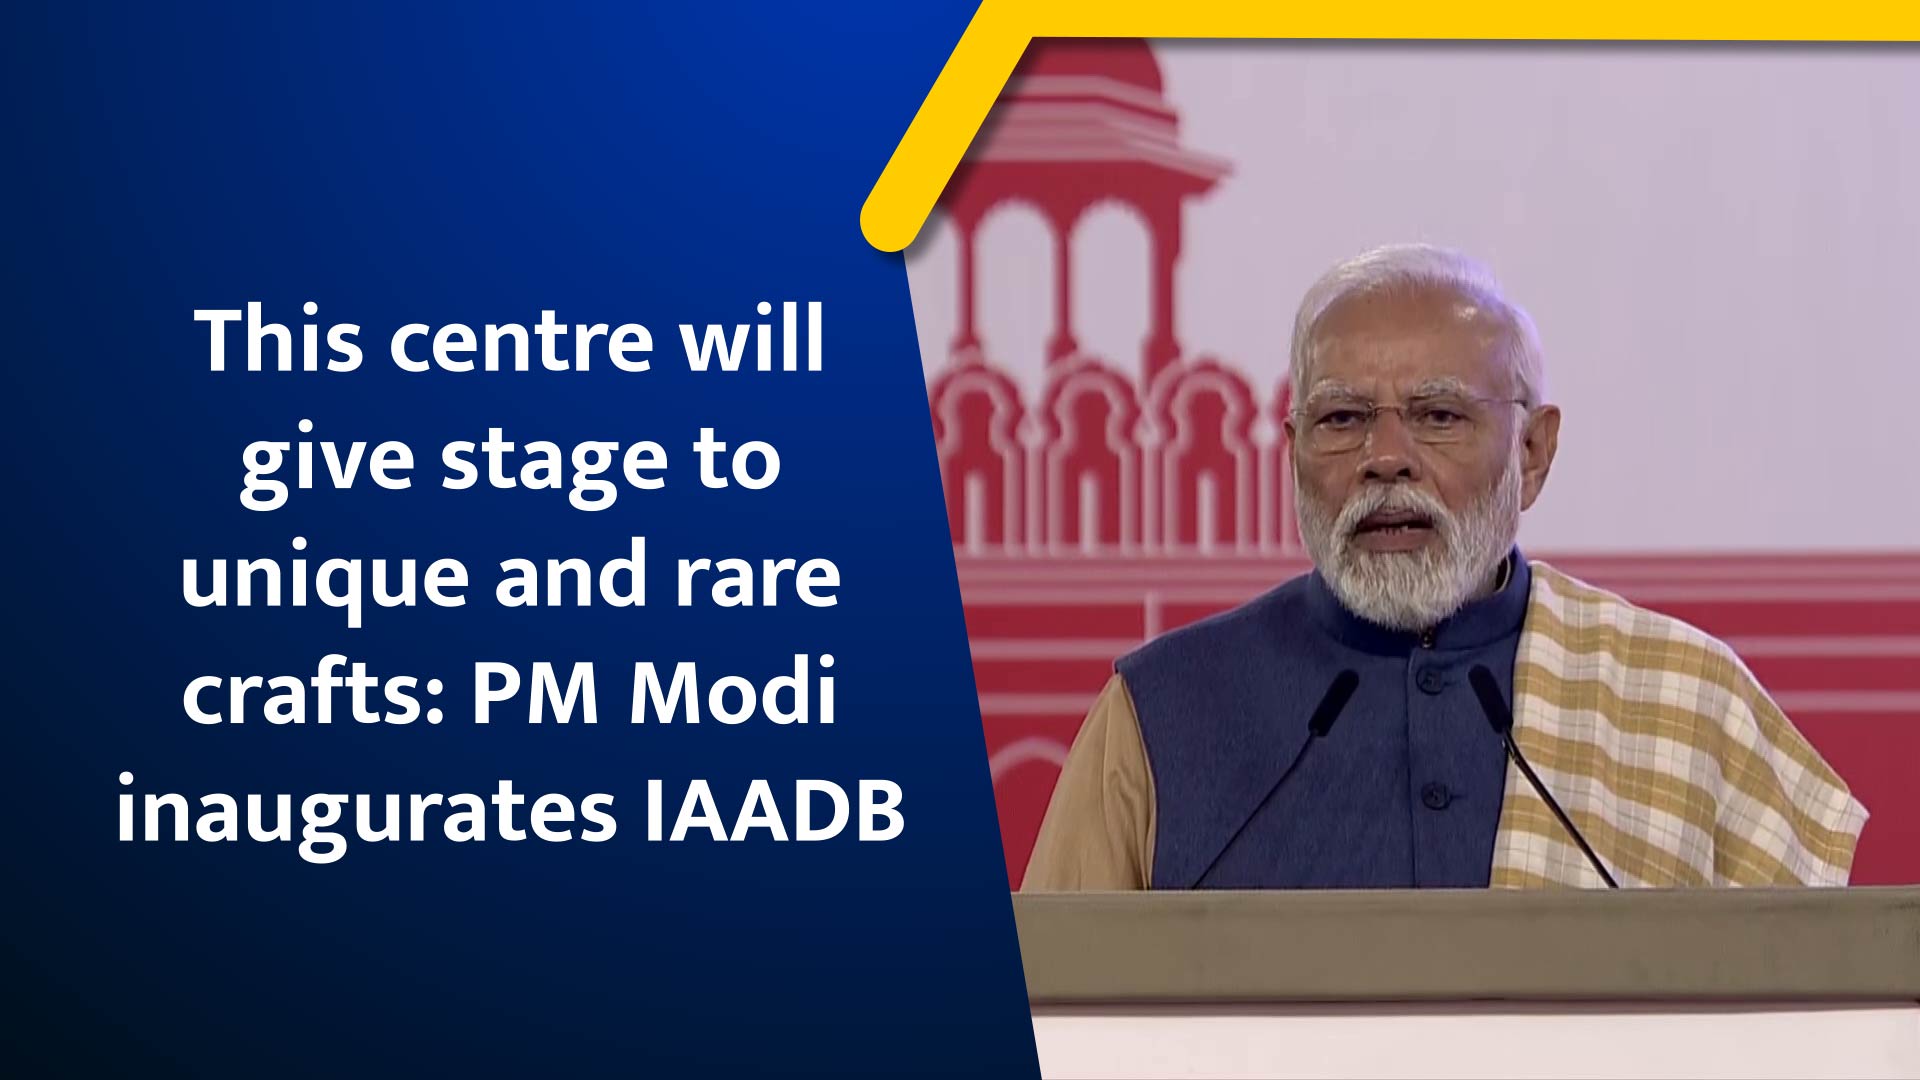 This centre will give stage to unique and rare crafts: PM Narendra Modi inaugurates IAADB